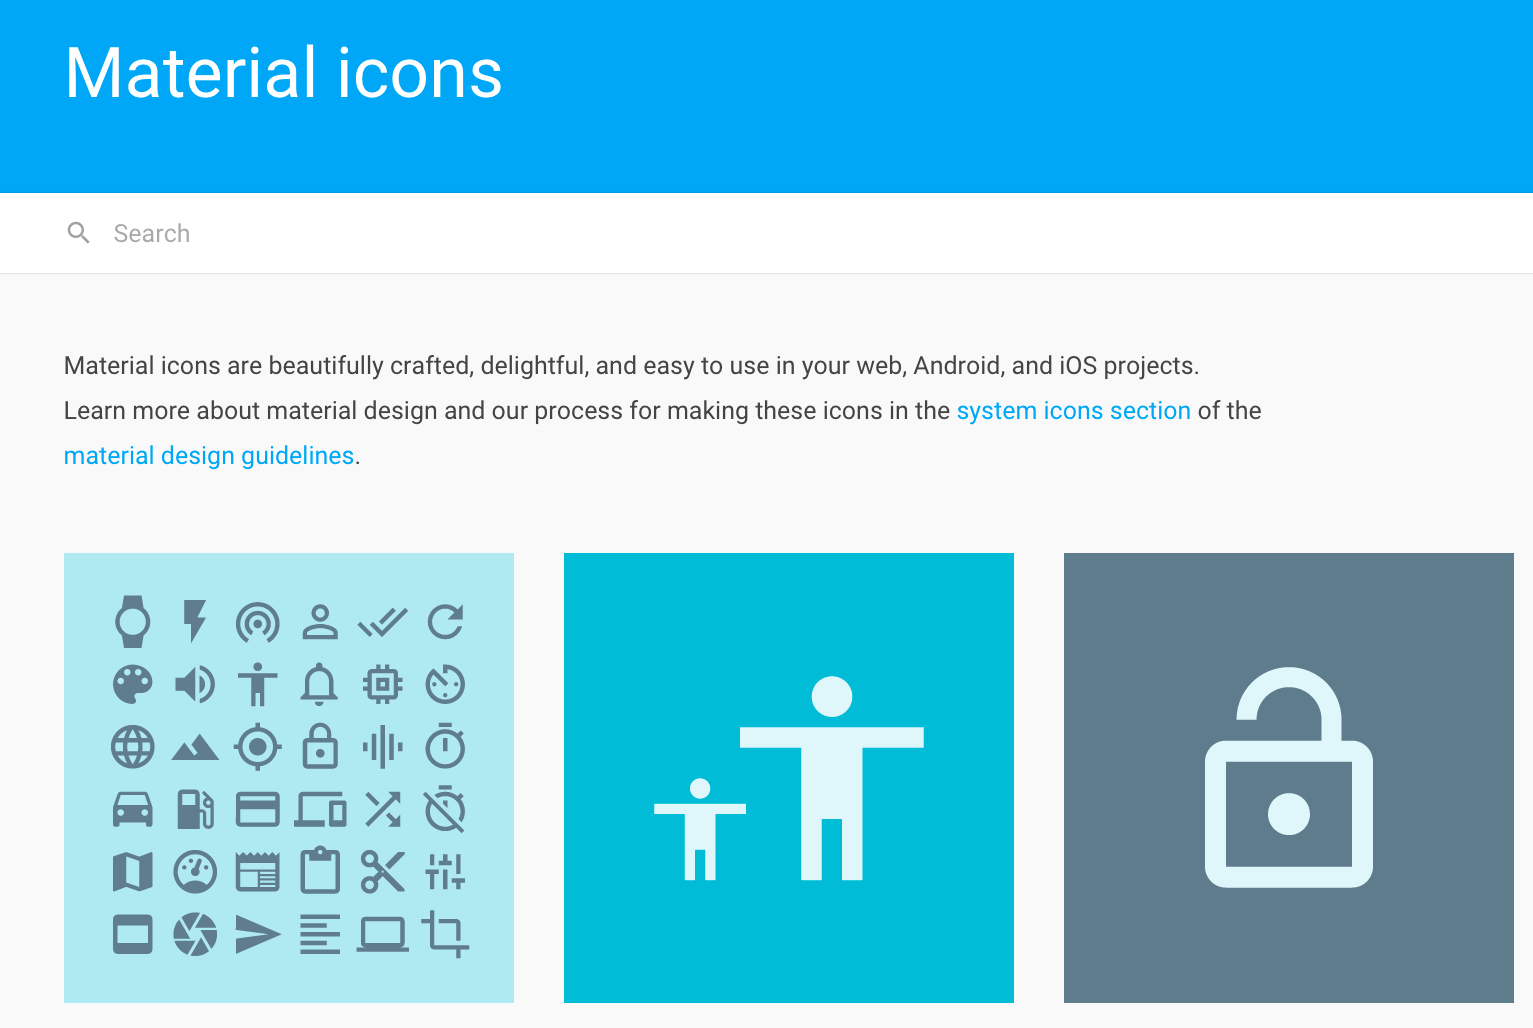 Material icons - 由 Google 提供的免費精美向量圖示集隨你使用